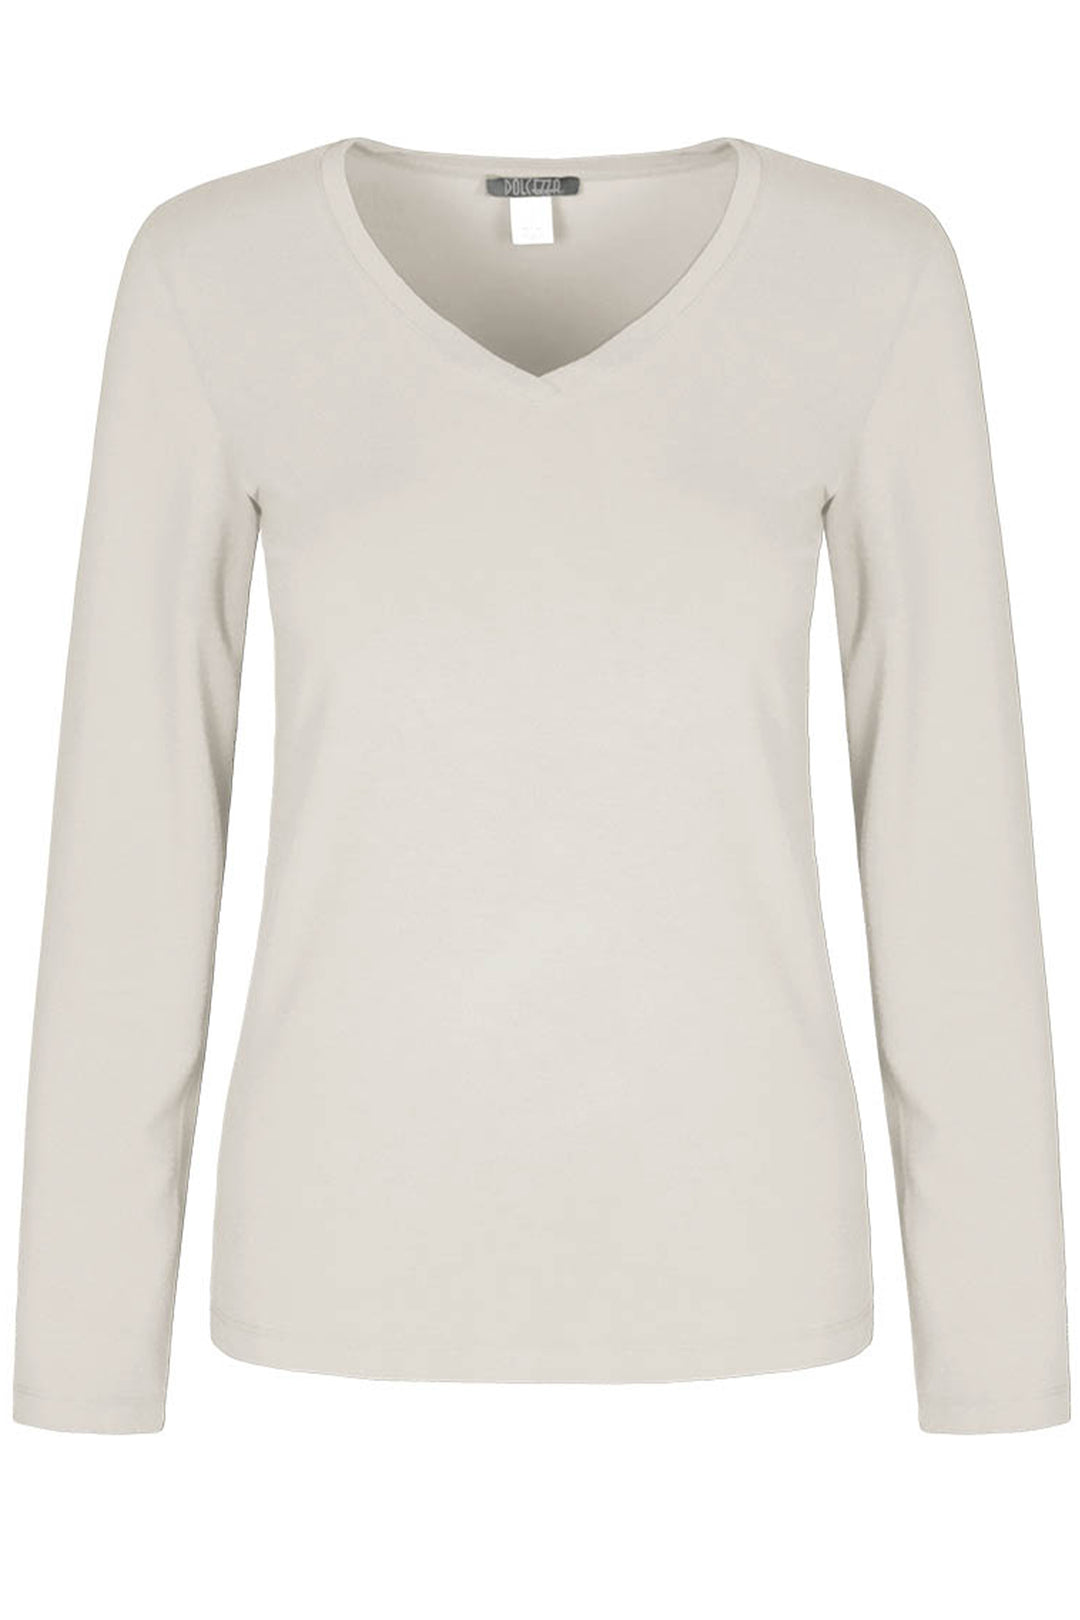 Dolcezza women's long sleeve V-neck cotton top - frontDolcezza women's long sleeve V-neck cotton top - vanilla